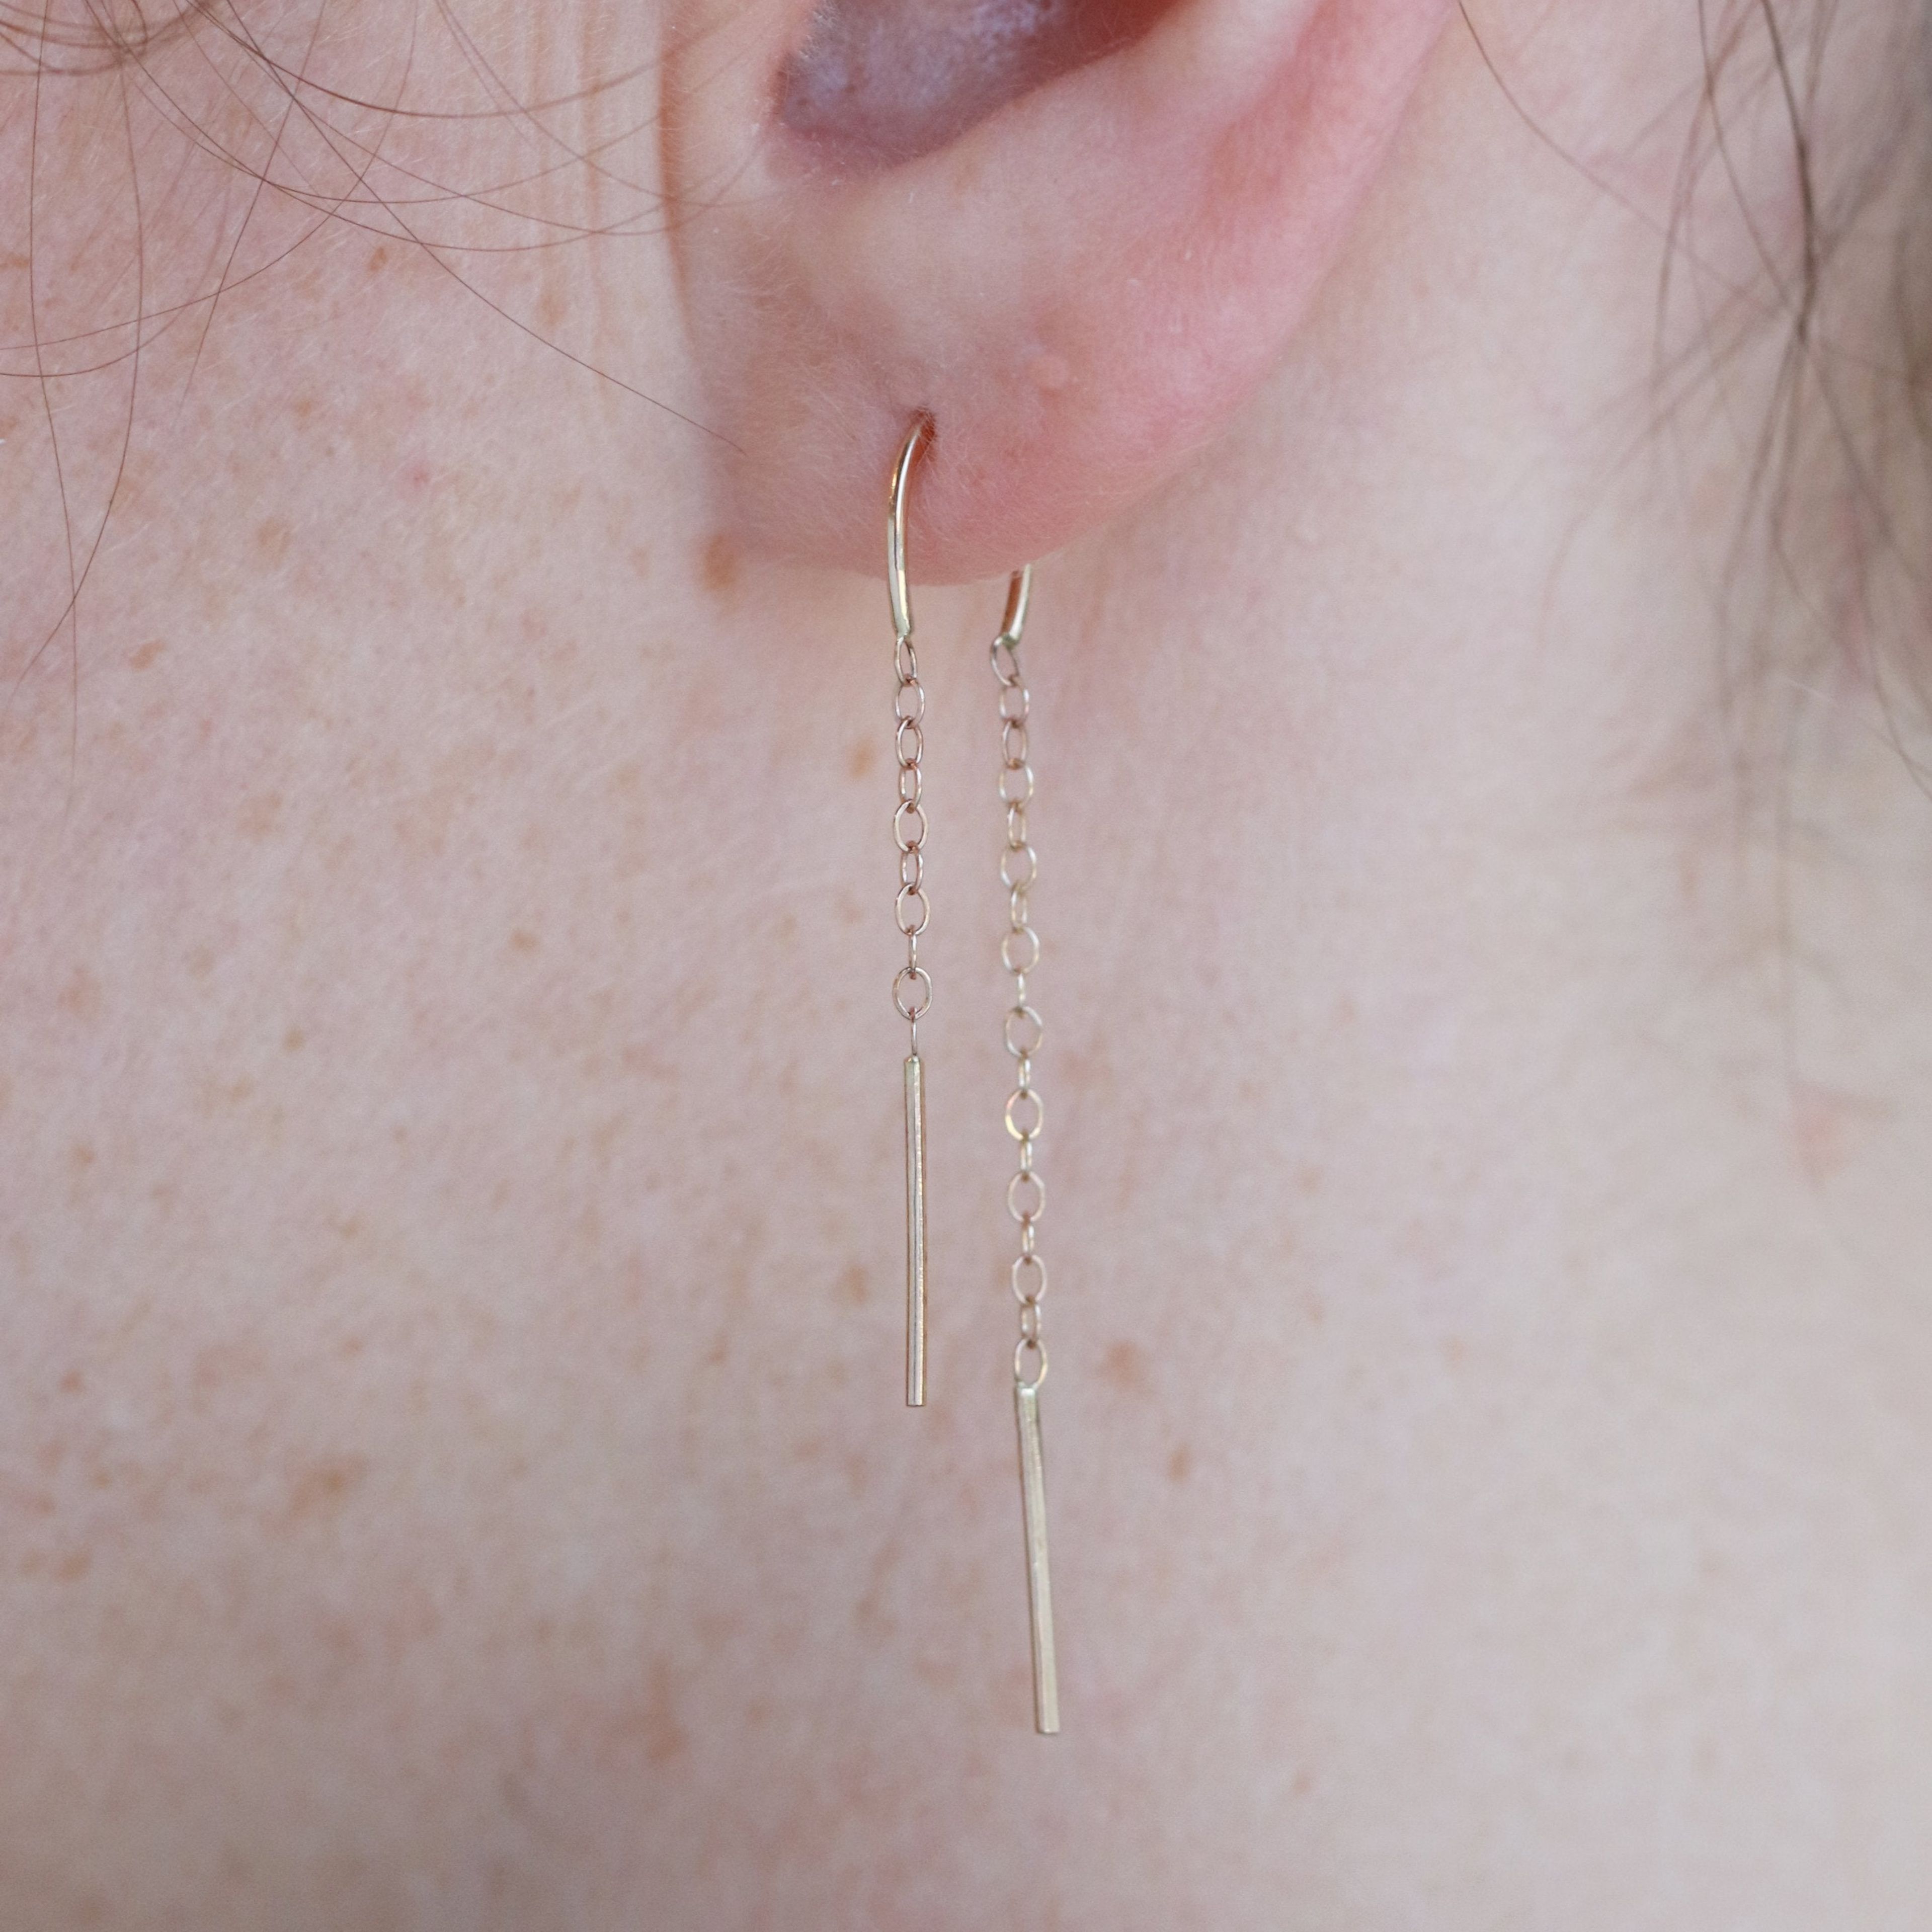 Horseshoe chain earrings